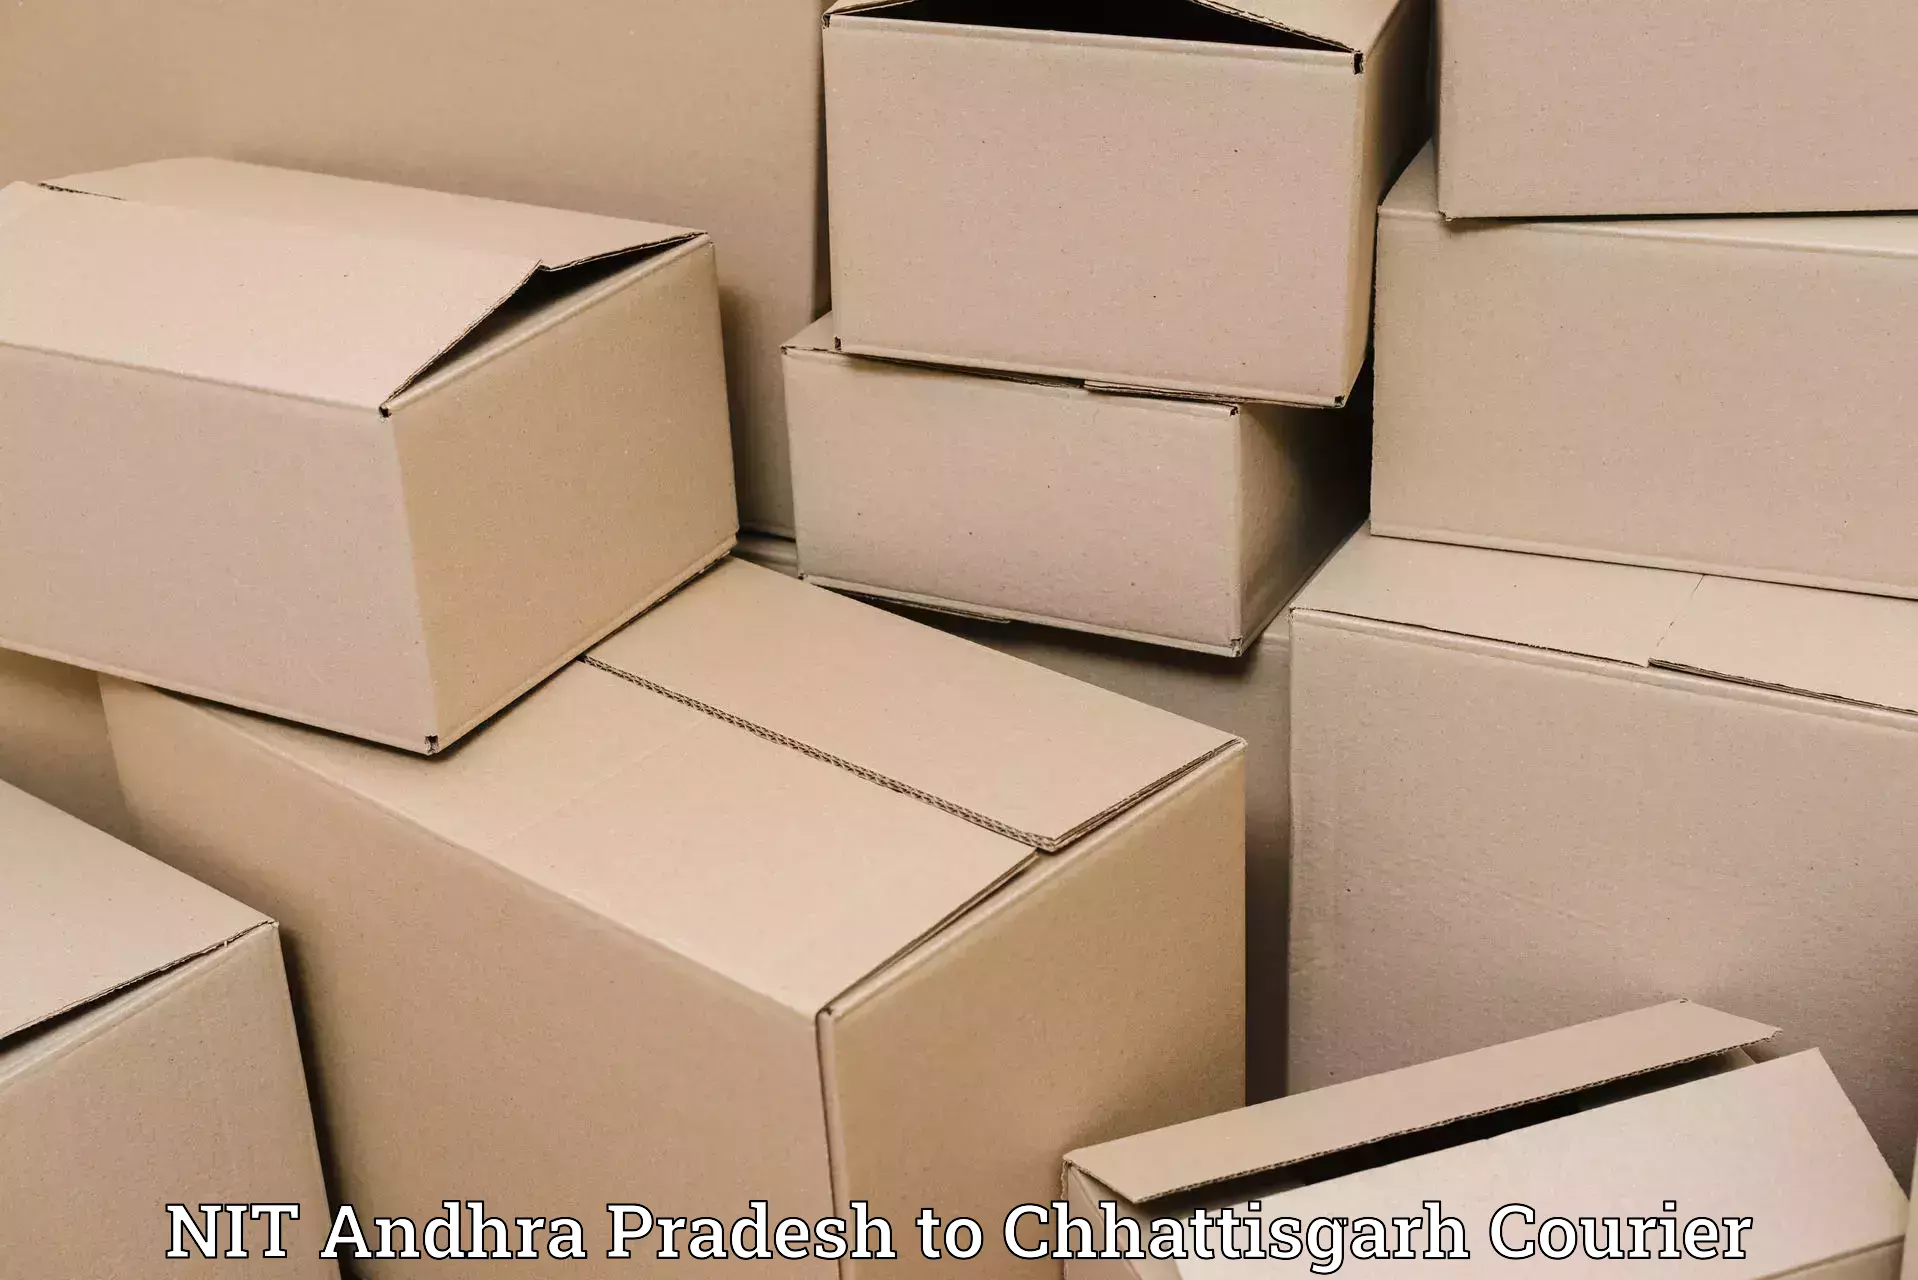 24-hour courier services NIT Andhra Pradesh to Korea Chhattisgarh